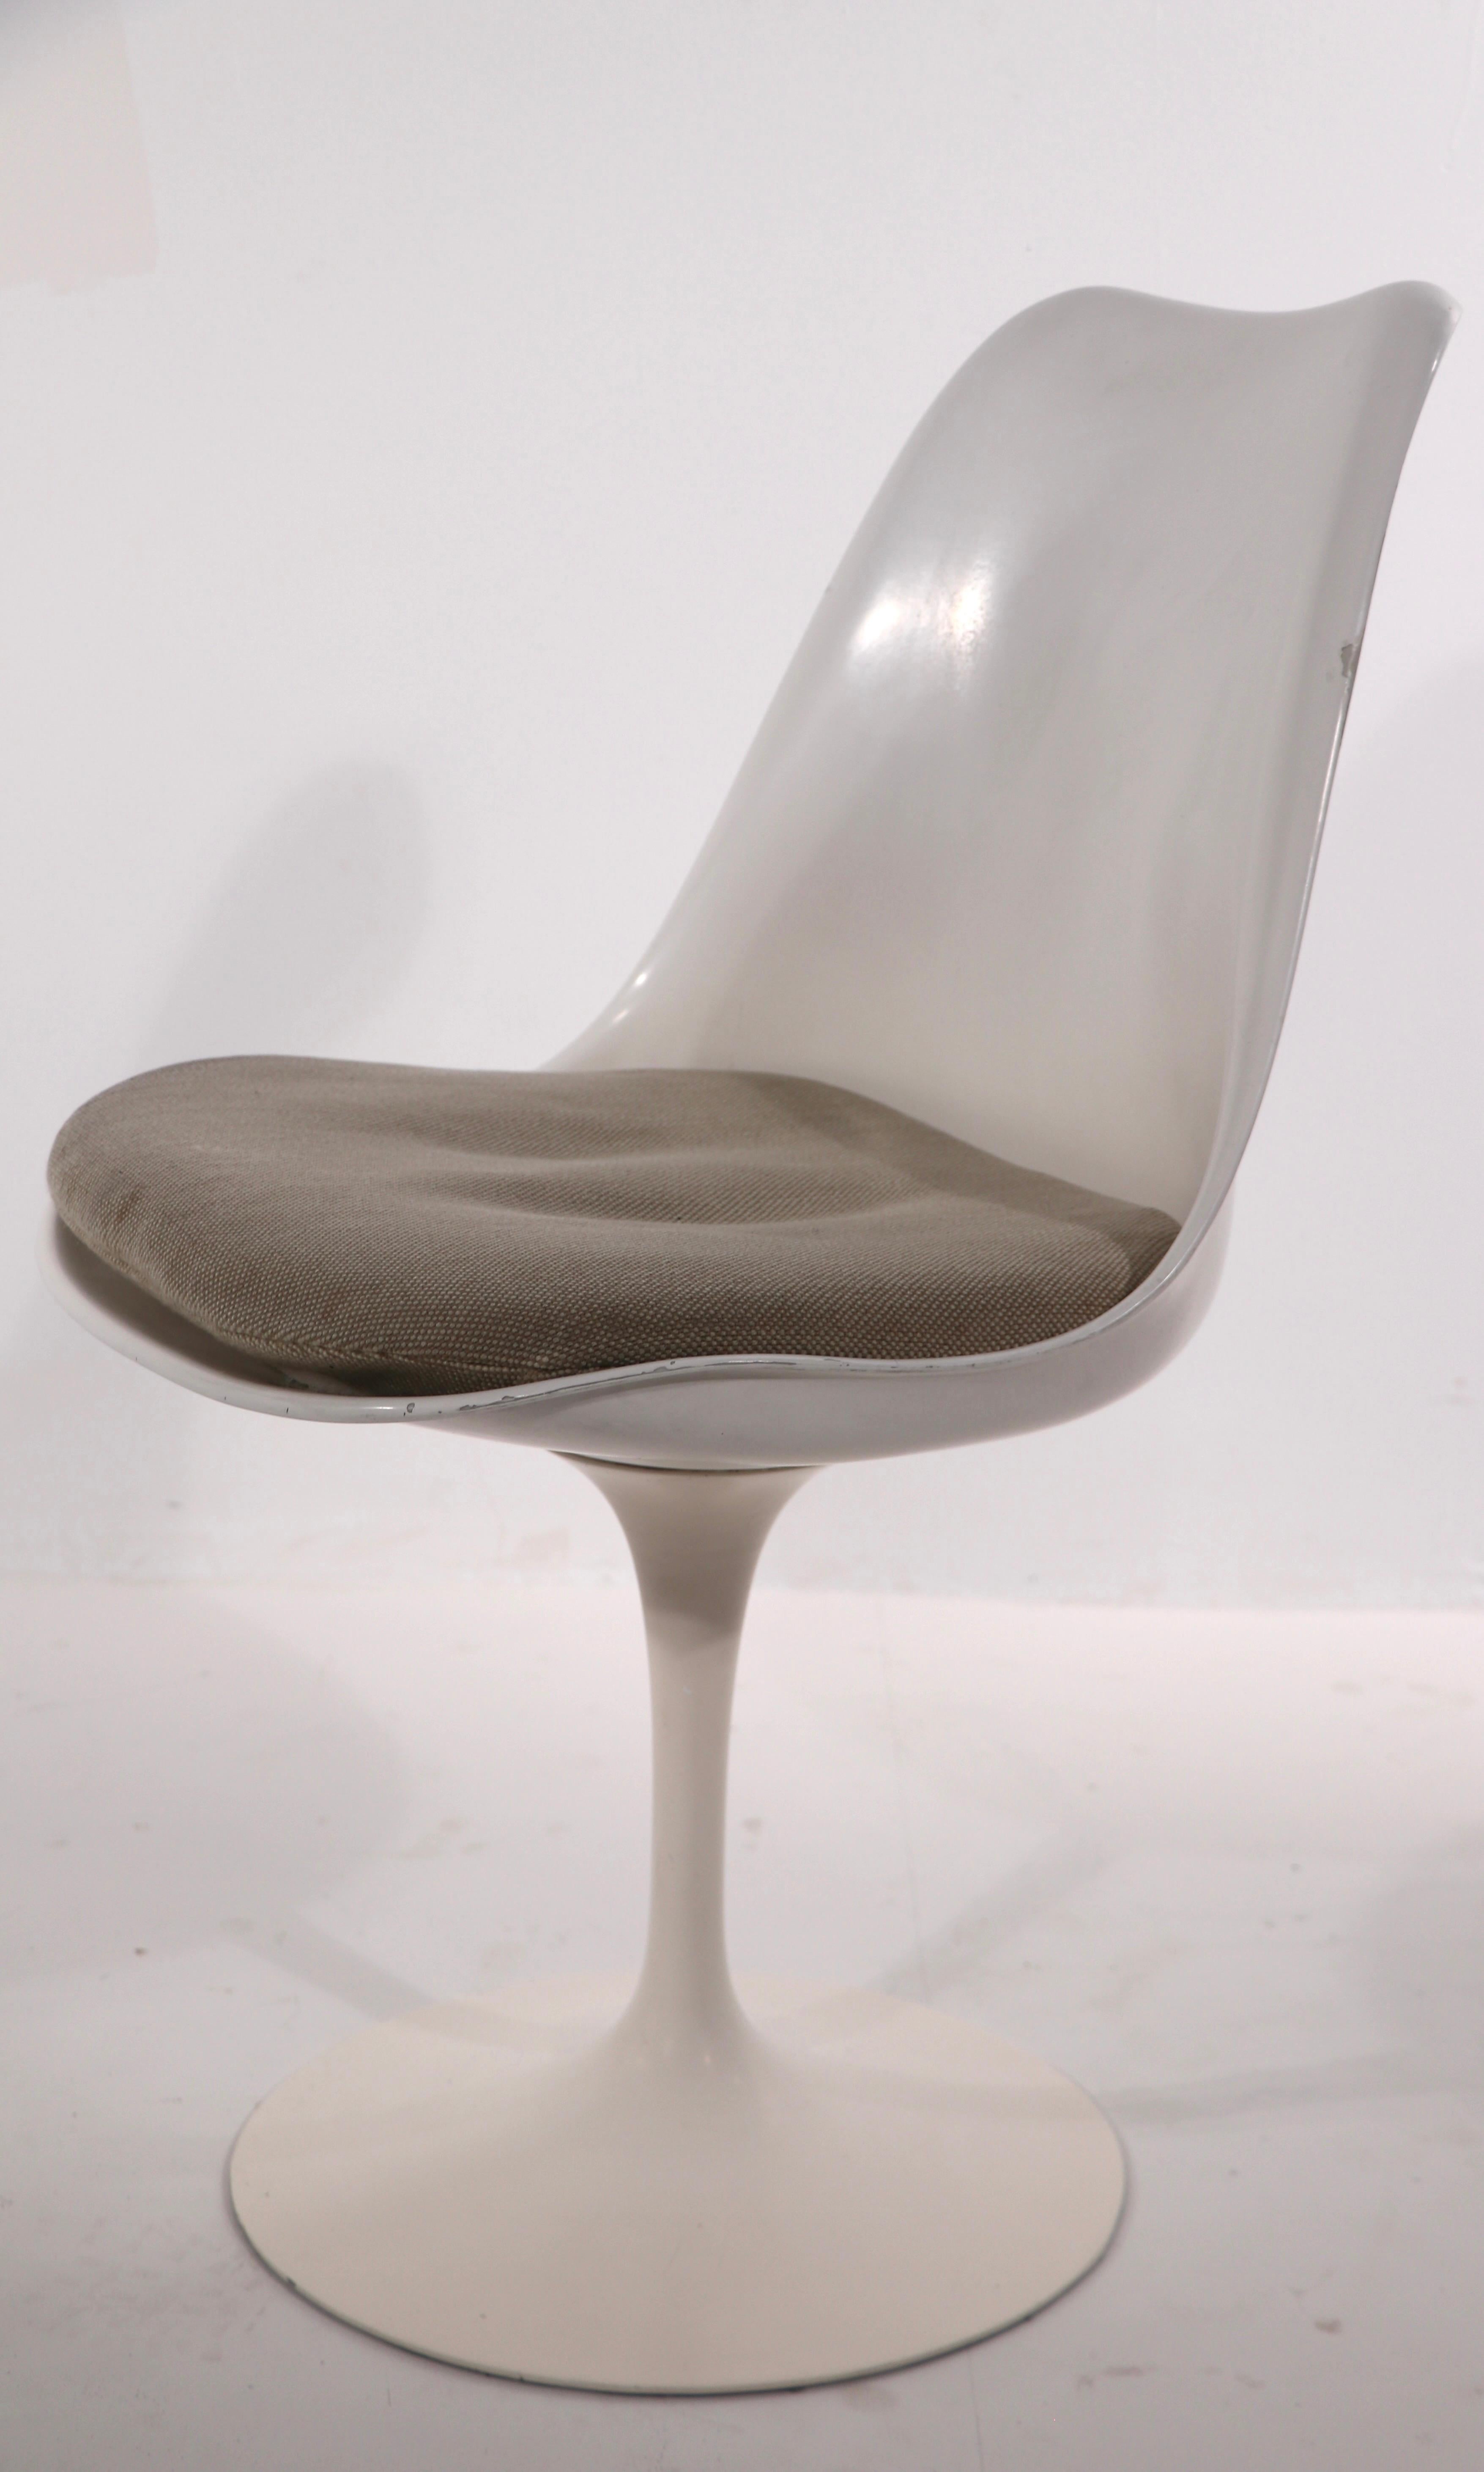 20th Century Pr. Eero Saarinen Tulip Chairs by Knoll